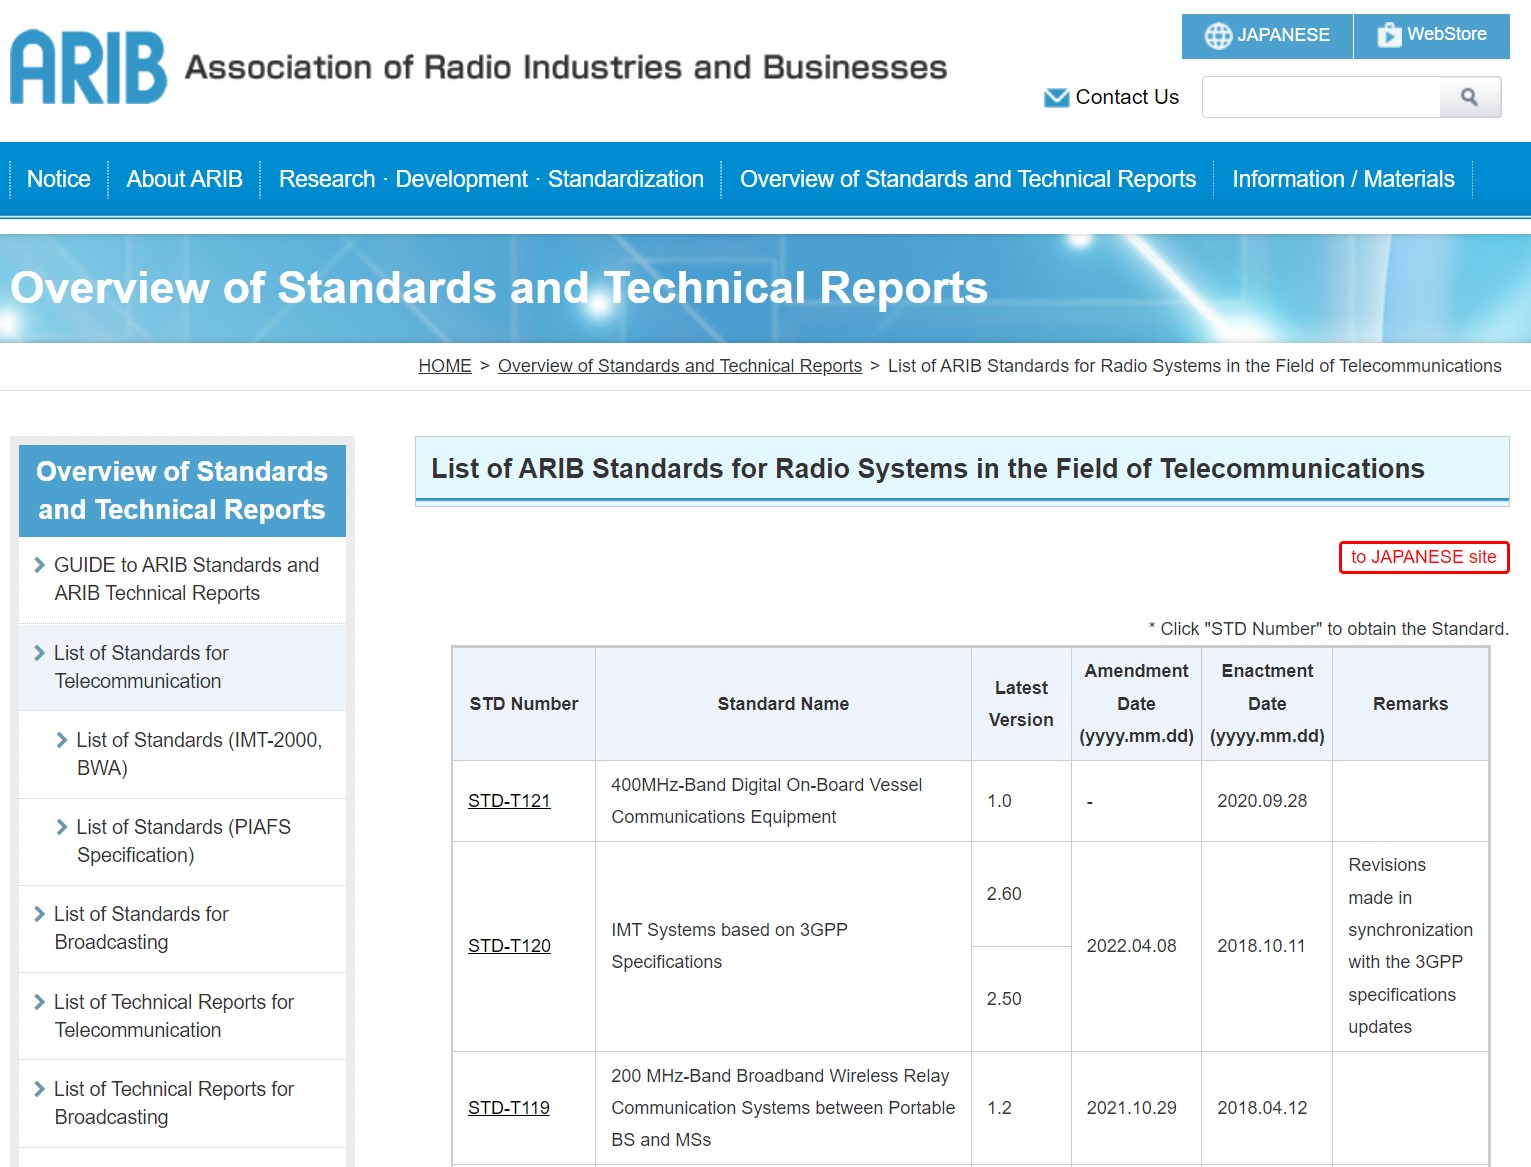 ARIB - Association of Radio Industries and Businesses